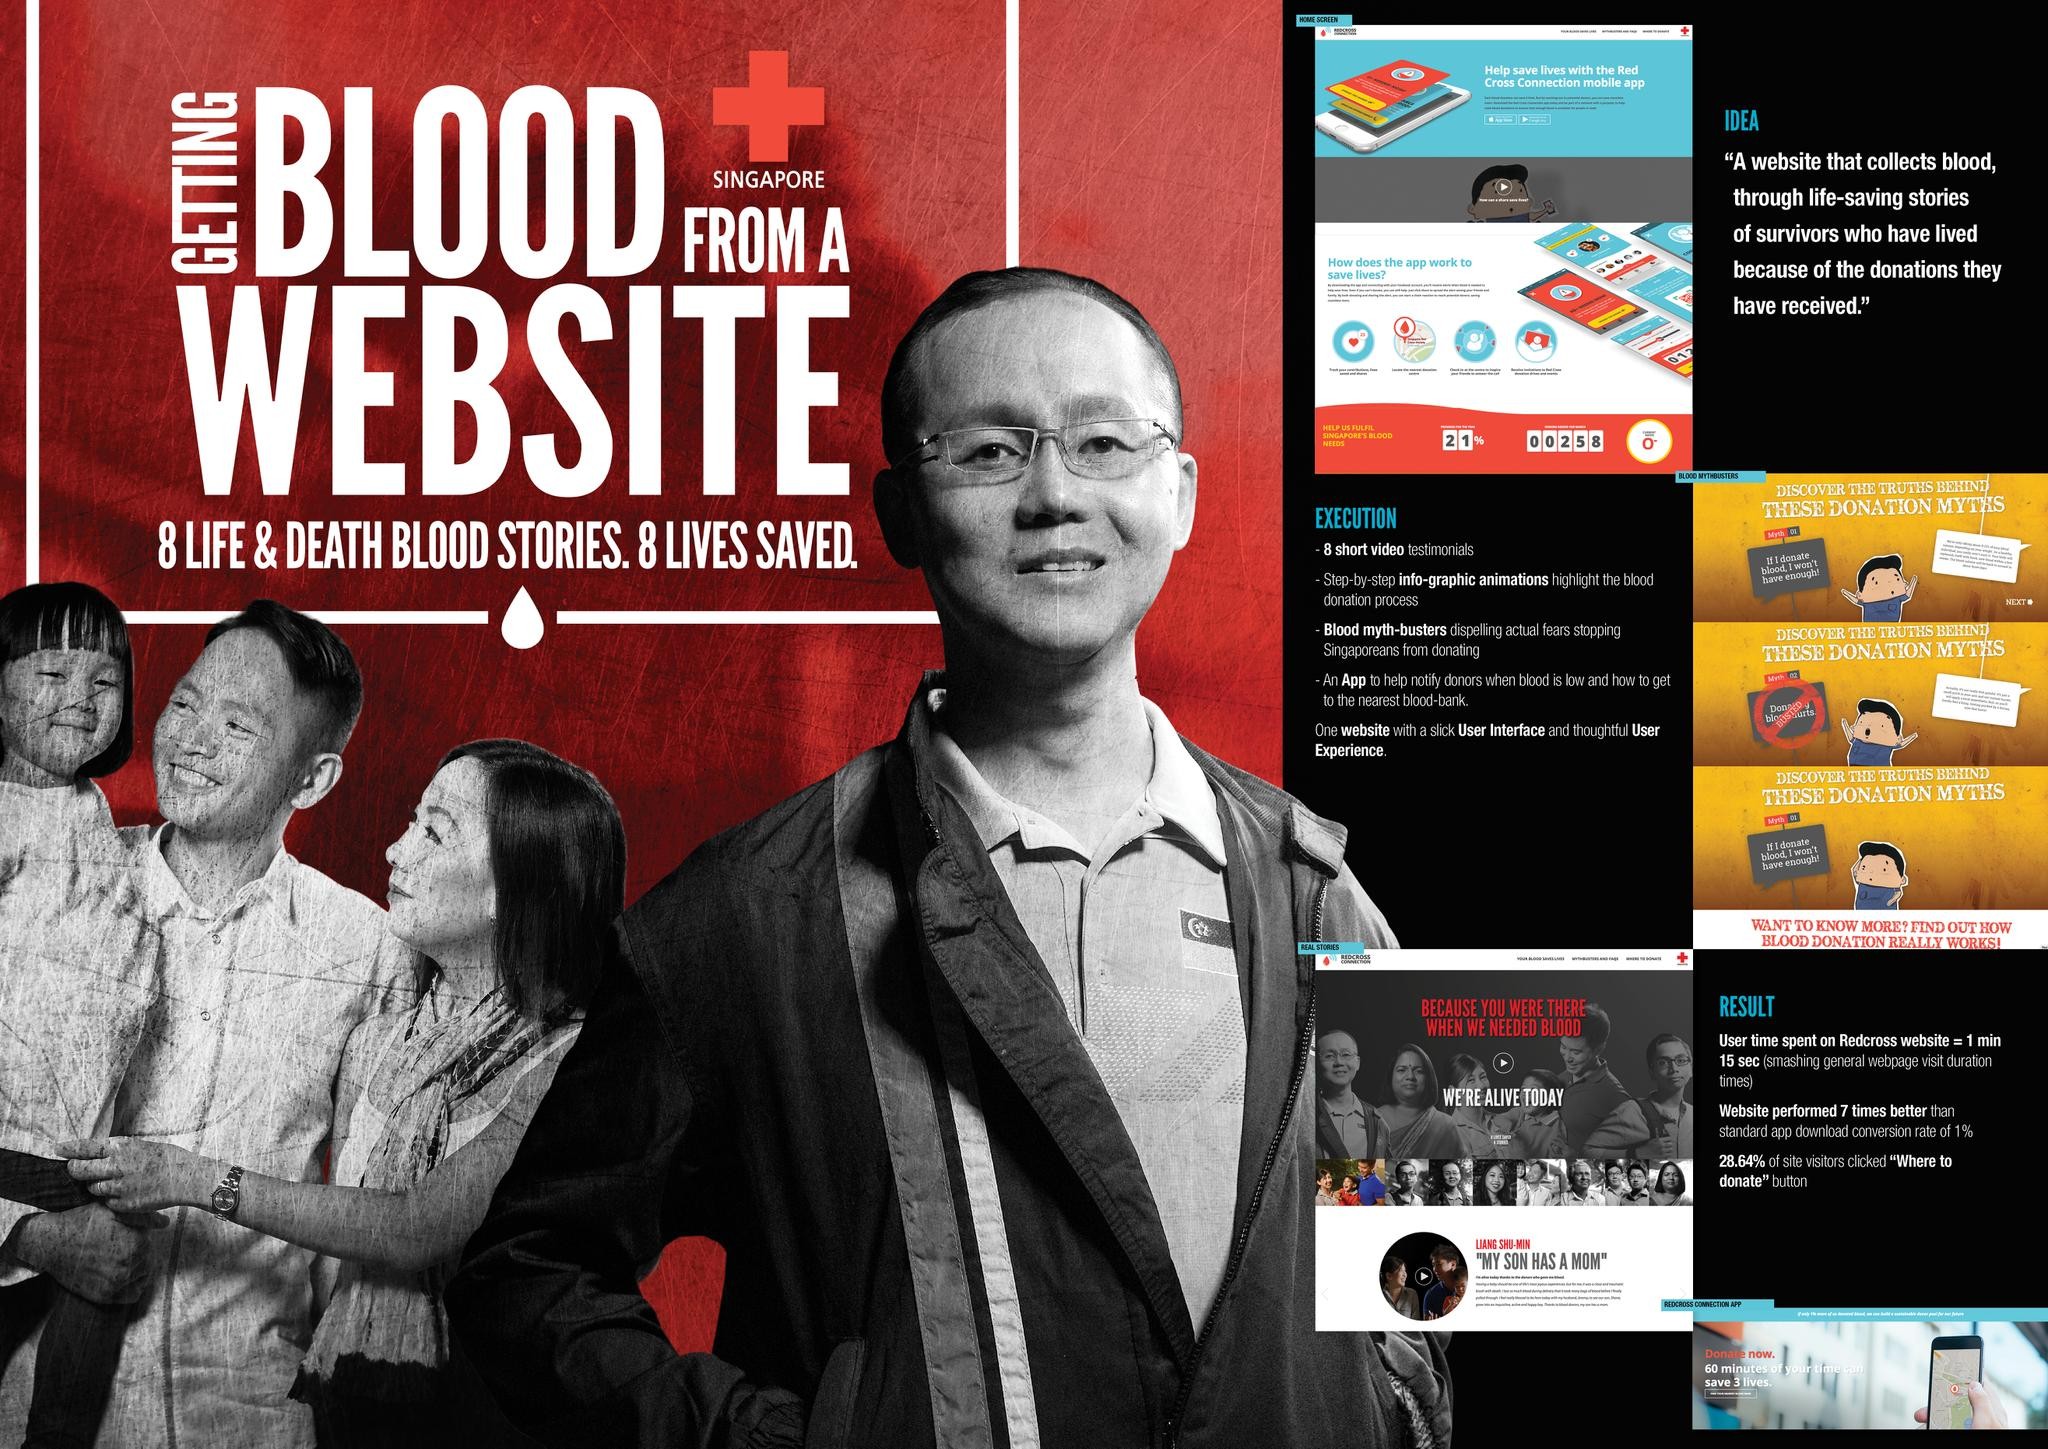 Singapore Red Cross Website